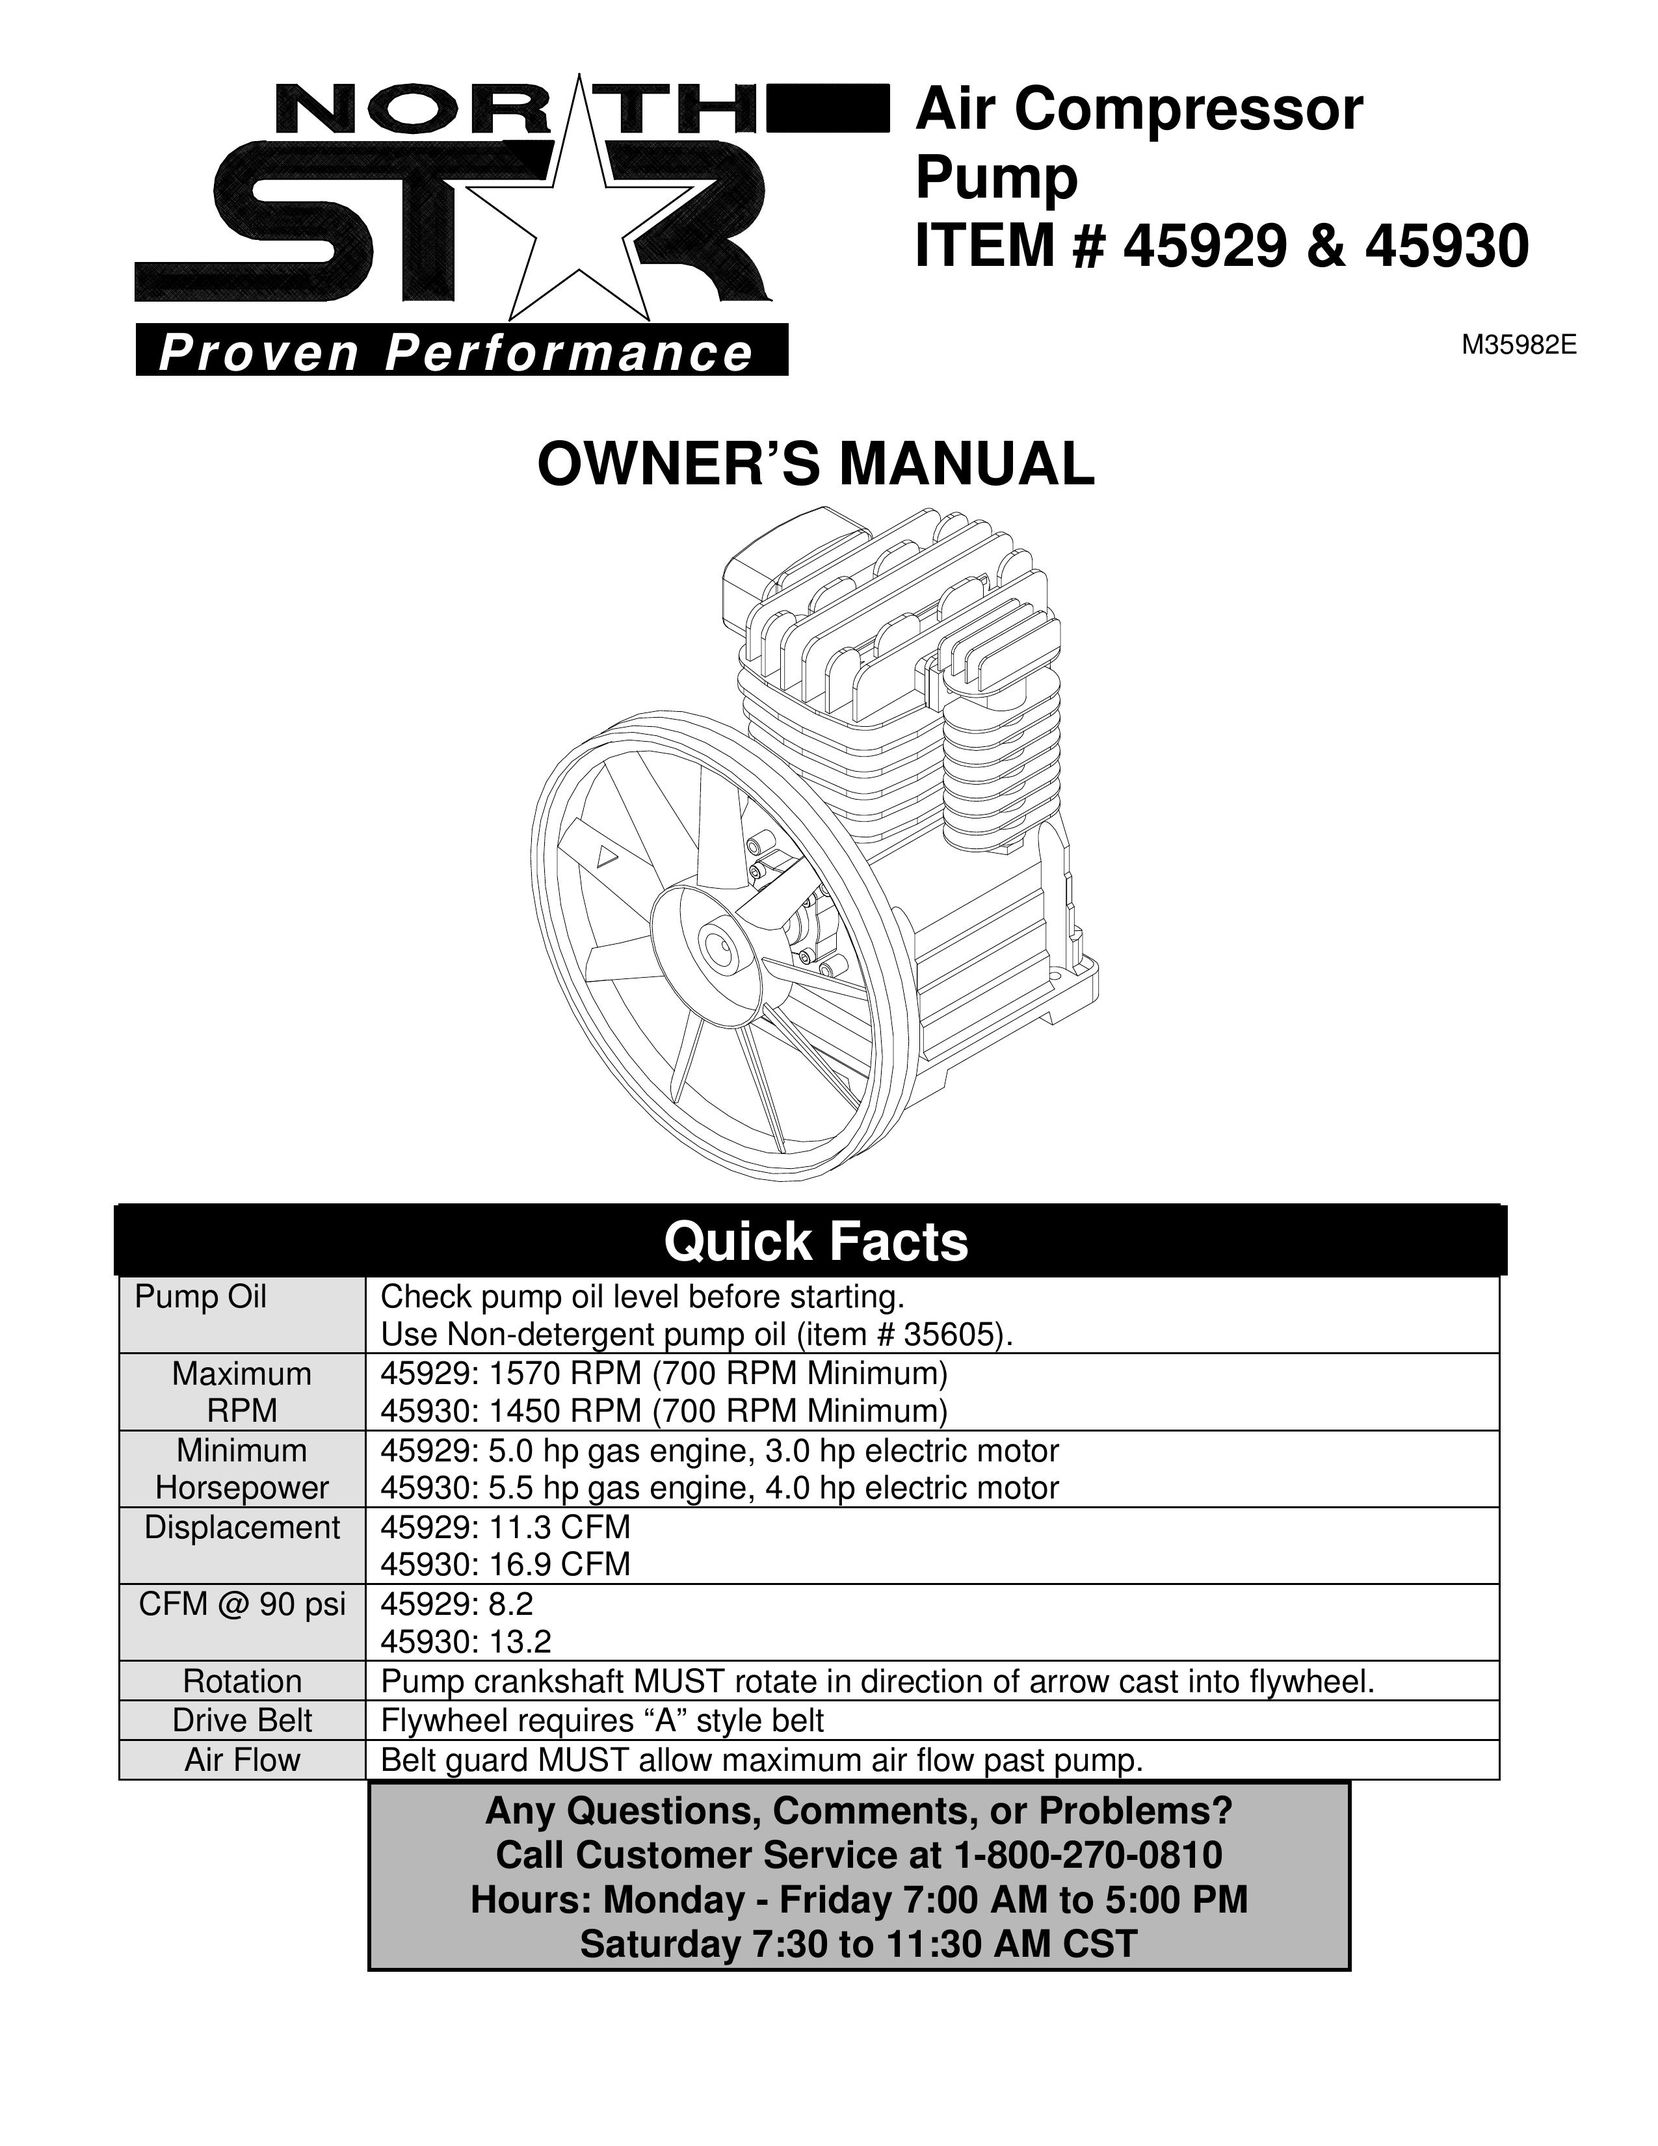 Northern Industrial Tools M35982E Air Compressor User Manual